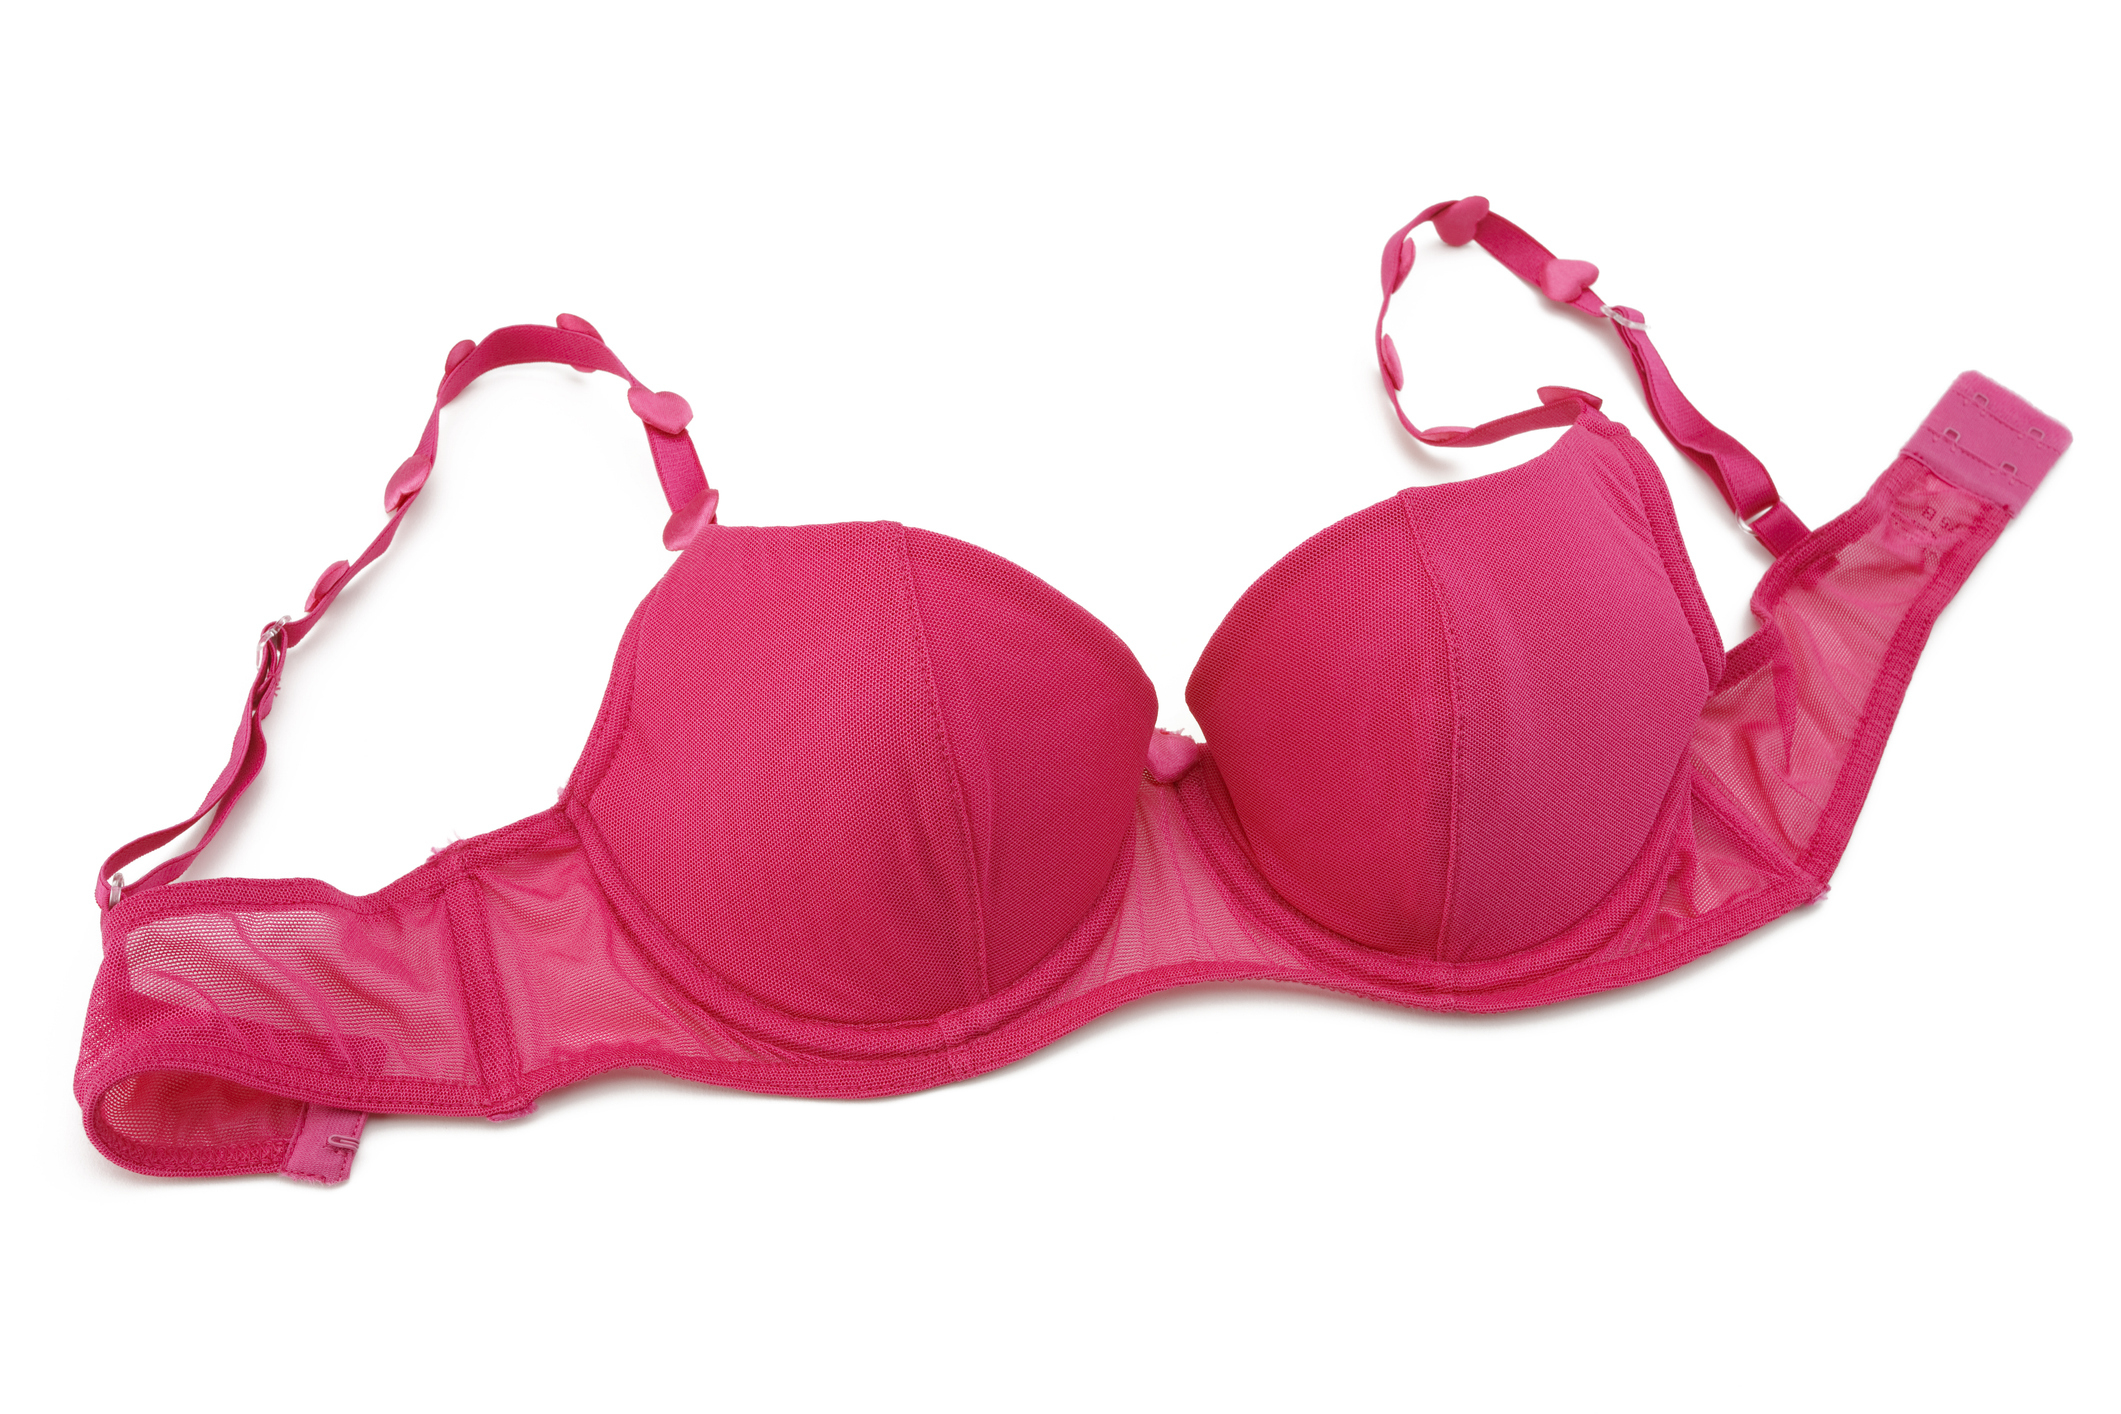 A pink bra lying flat on a surface